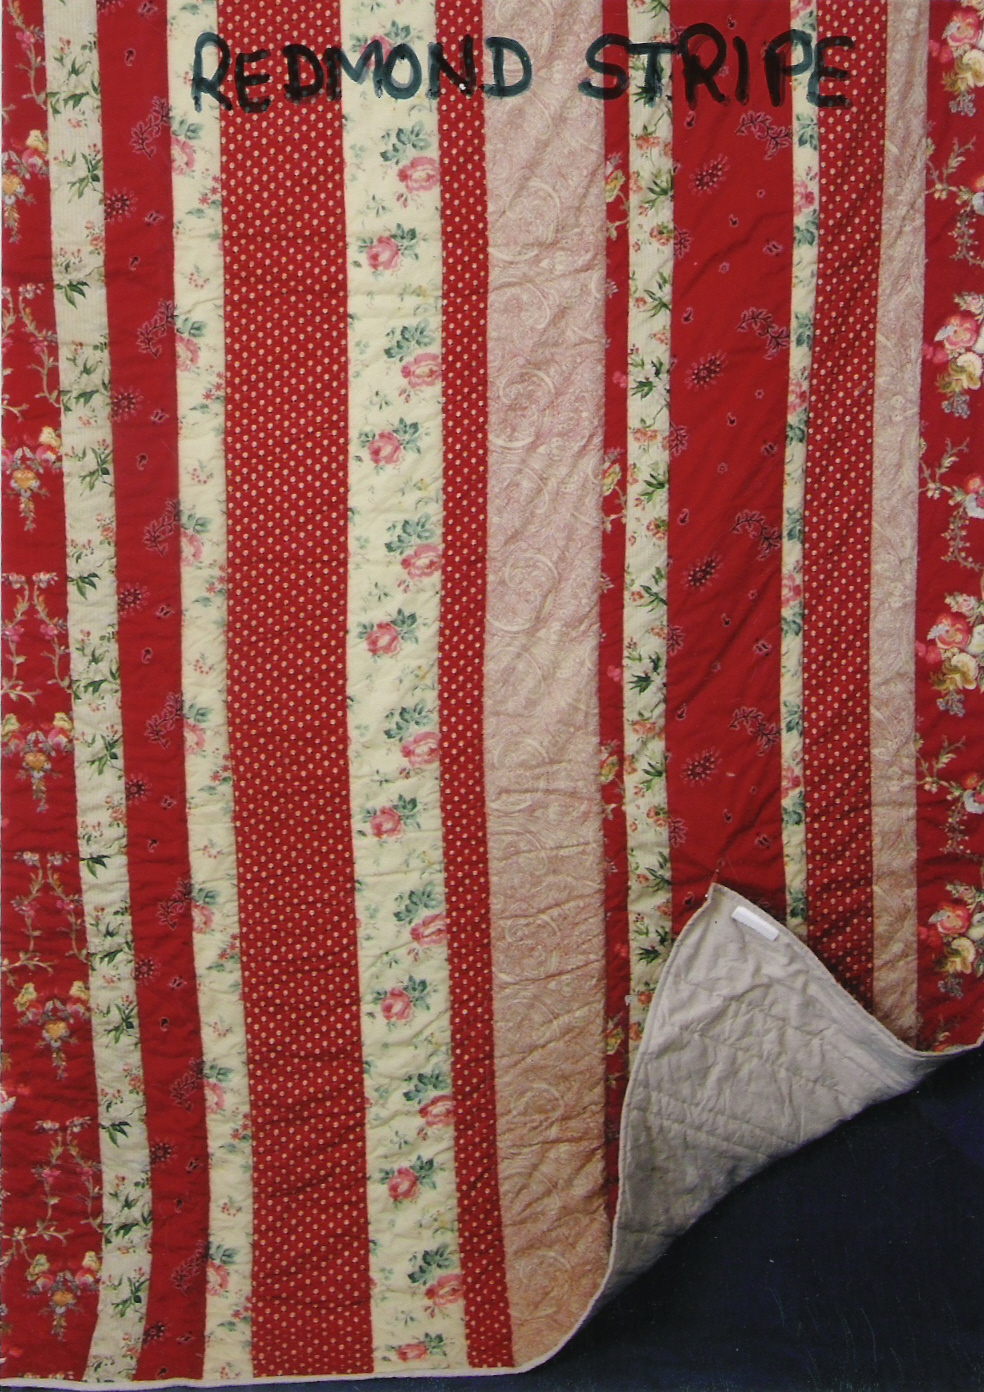 redmond stripes quilt